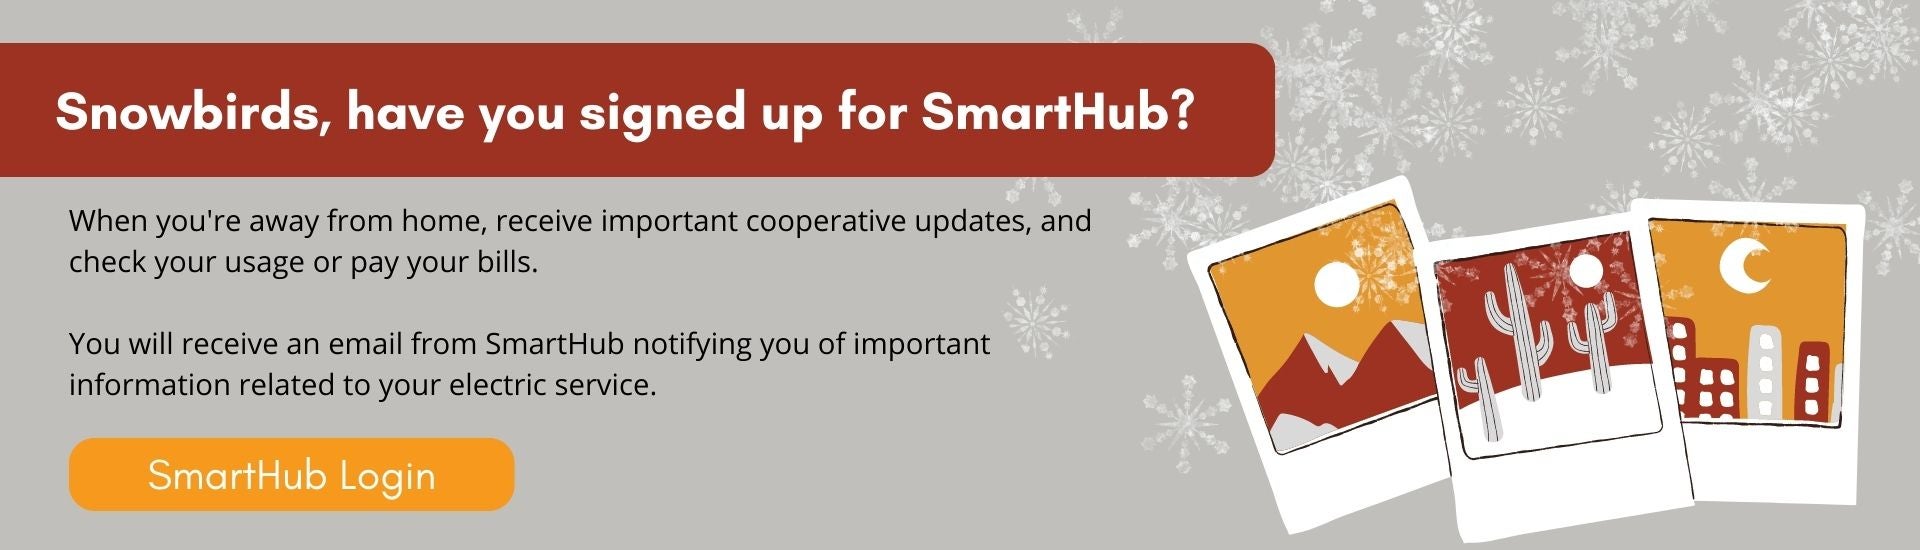 Snowbirds & SmartHub